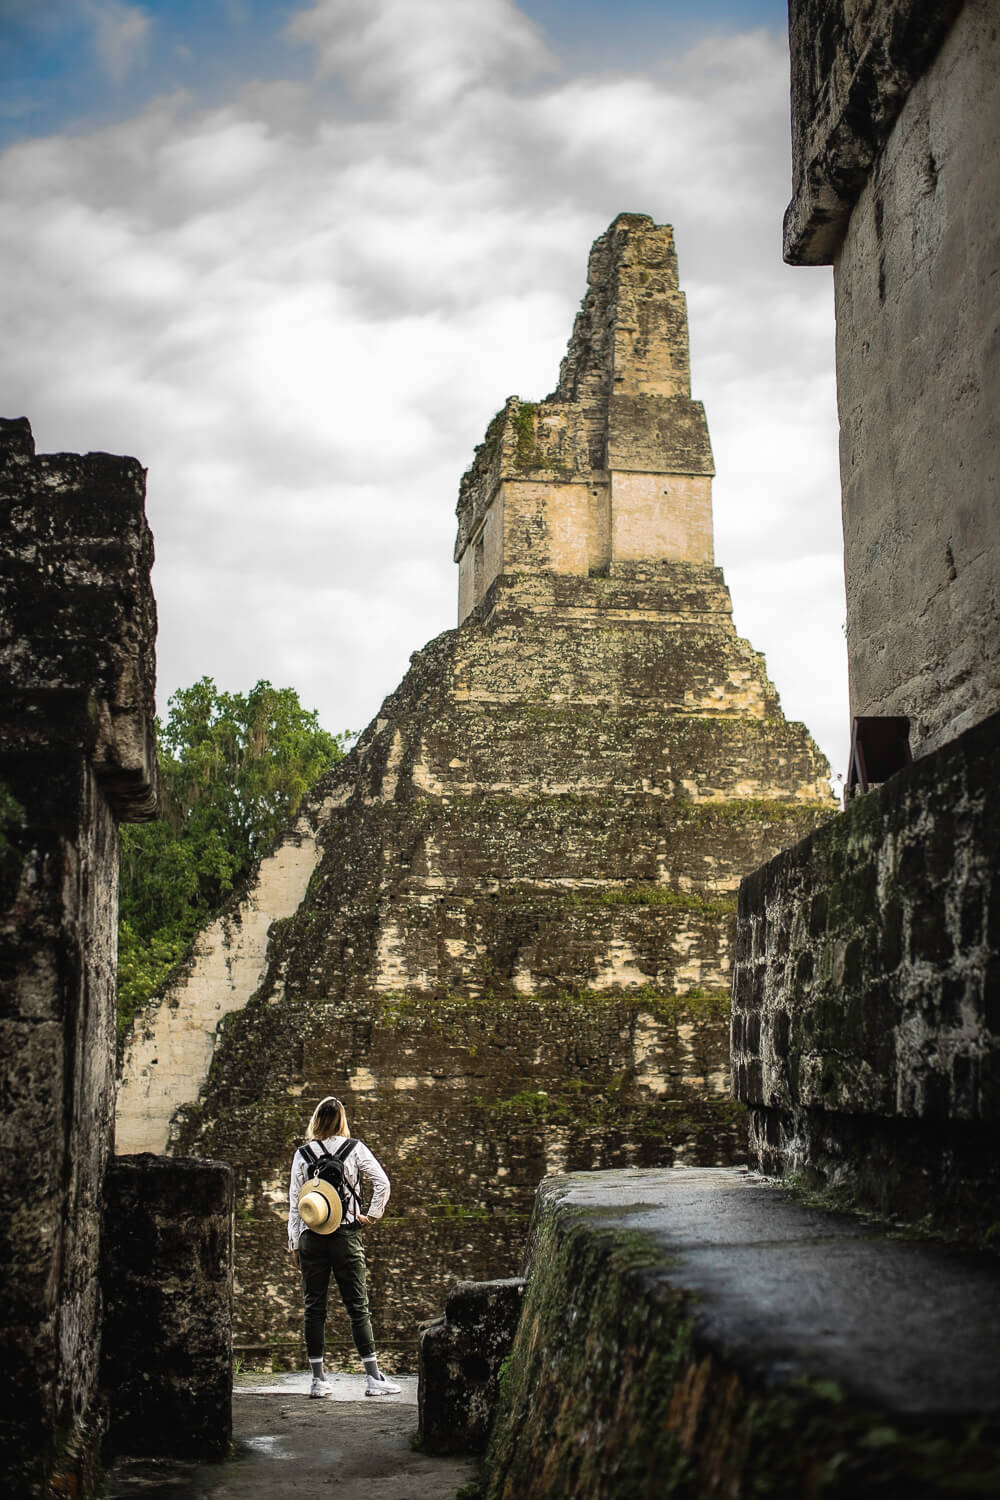 How to Get to Tikal Guatemala